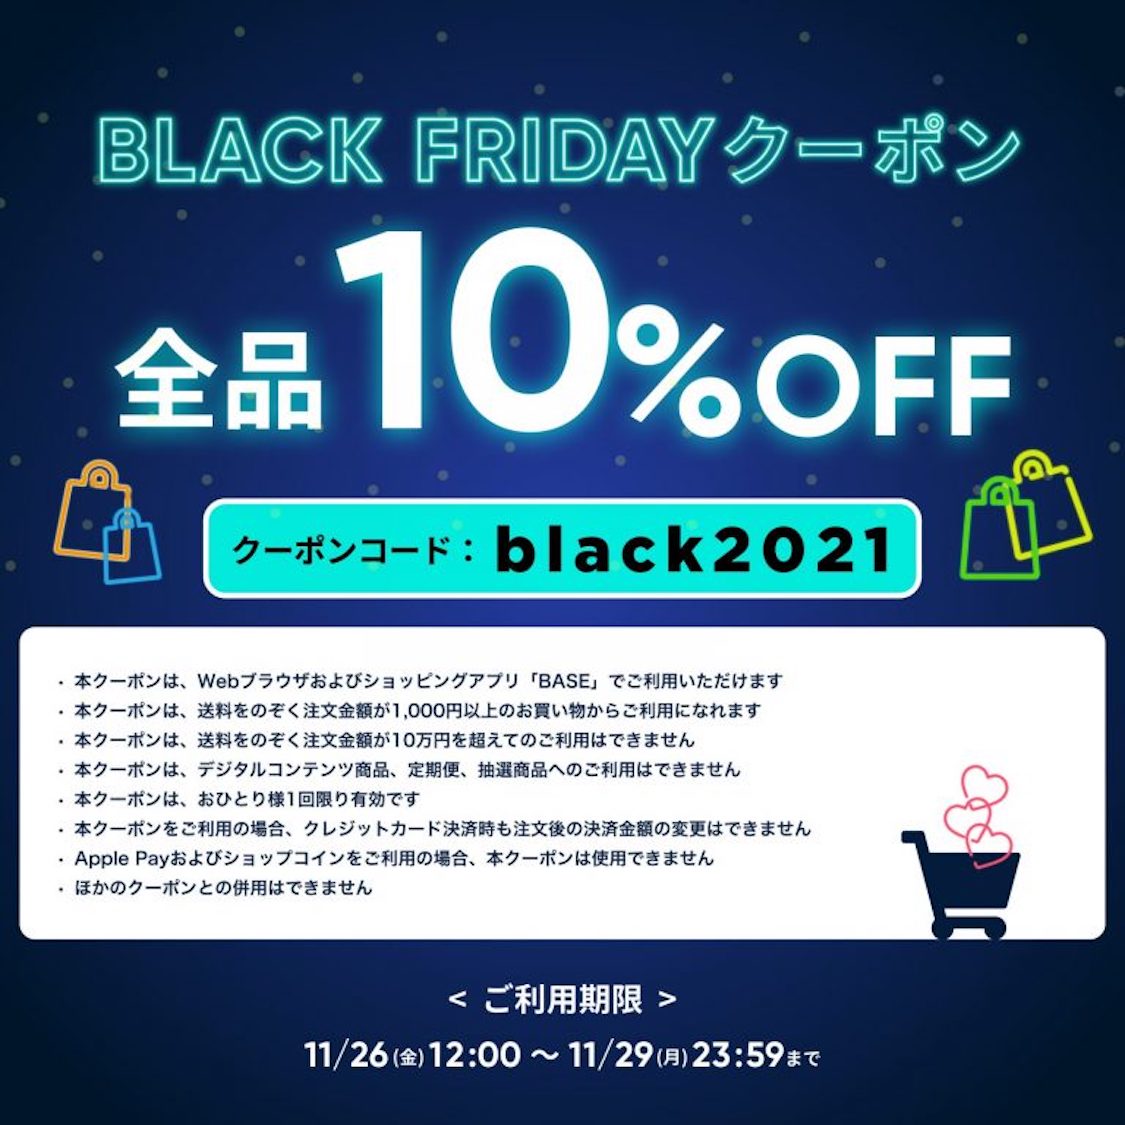 BLAZZ BLACK FRY FRI DAY!! 11.26(金)12:00 START!!